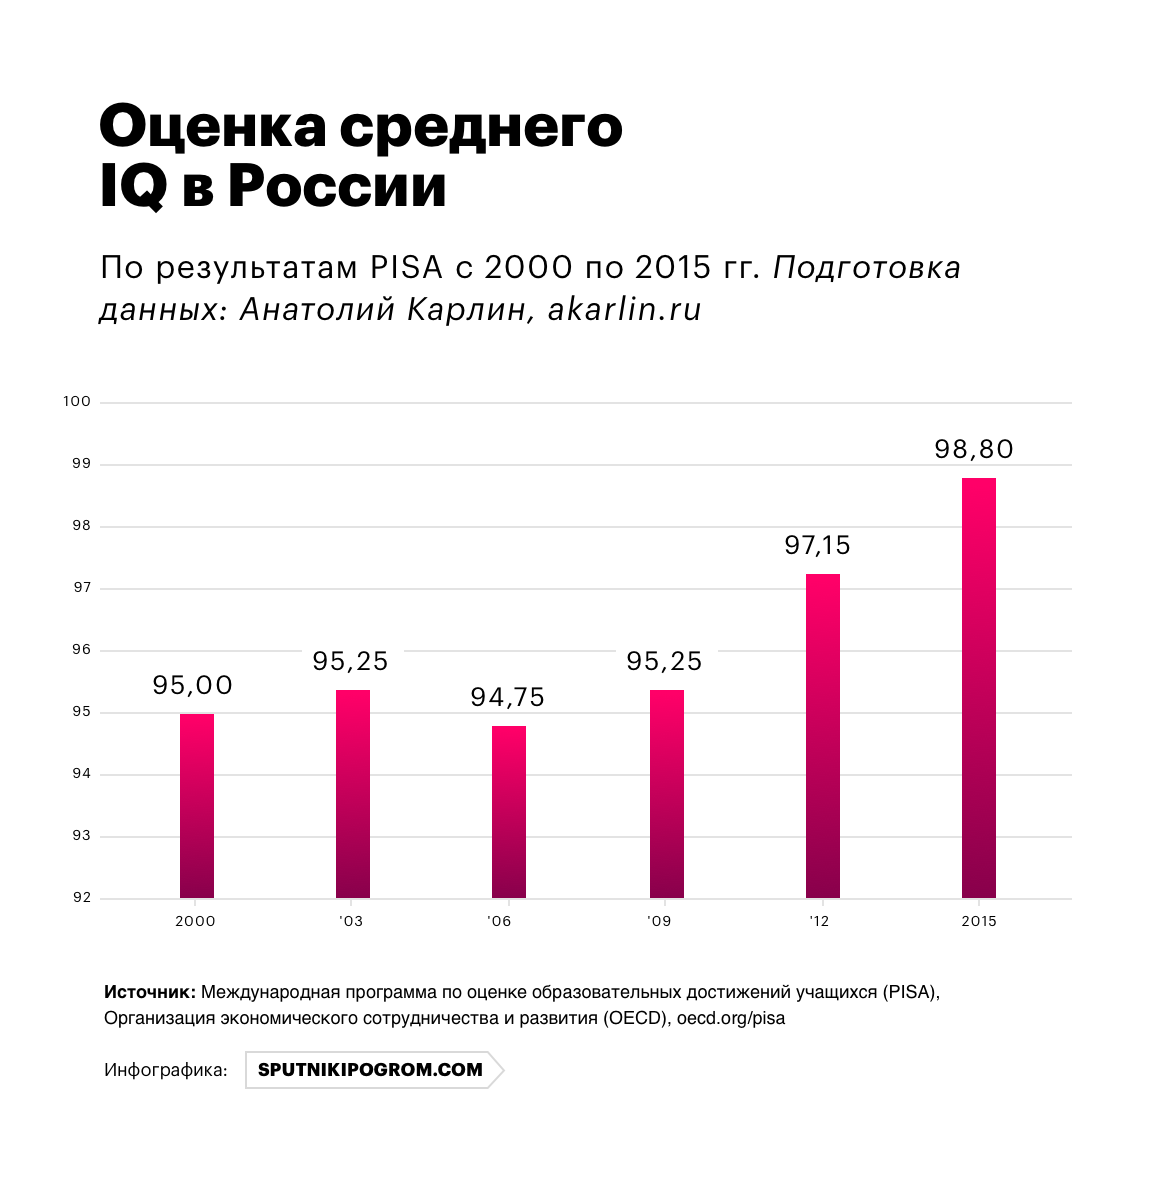 Средний IQ В России. IQ средняя статистика. Статистика IQ В России. Средний показатель IQ В России.